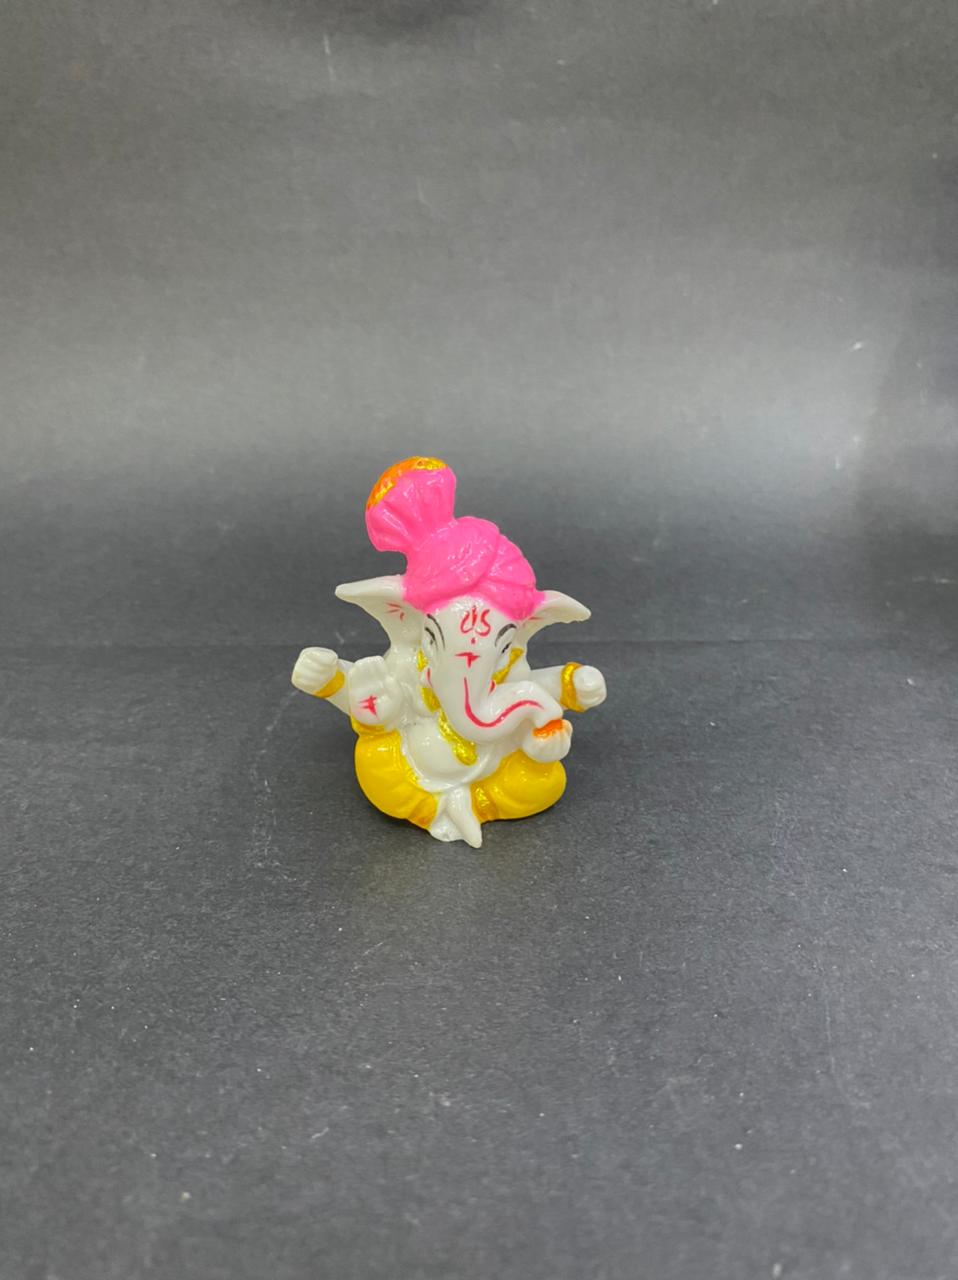 Turban Ganesha Cute Figure For Car Dashboard Spiritual Décor By Tamrapatra